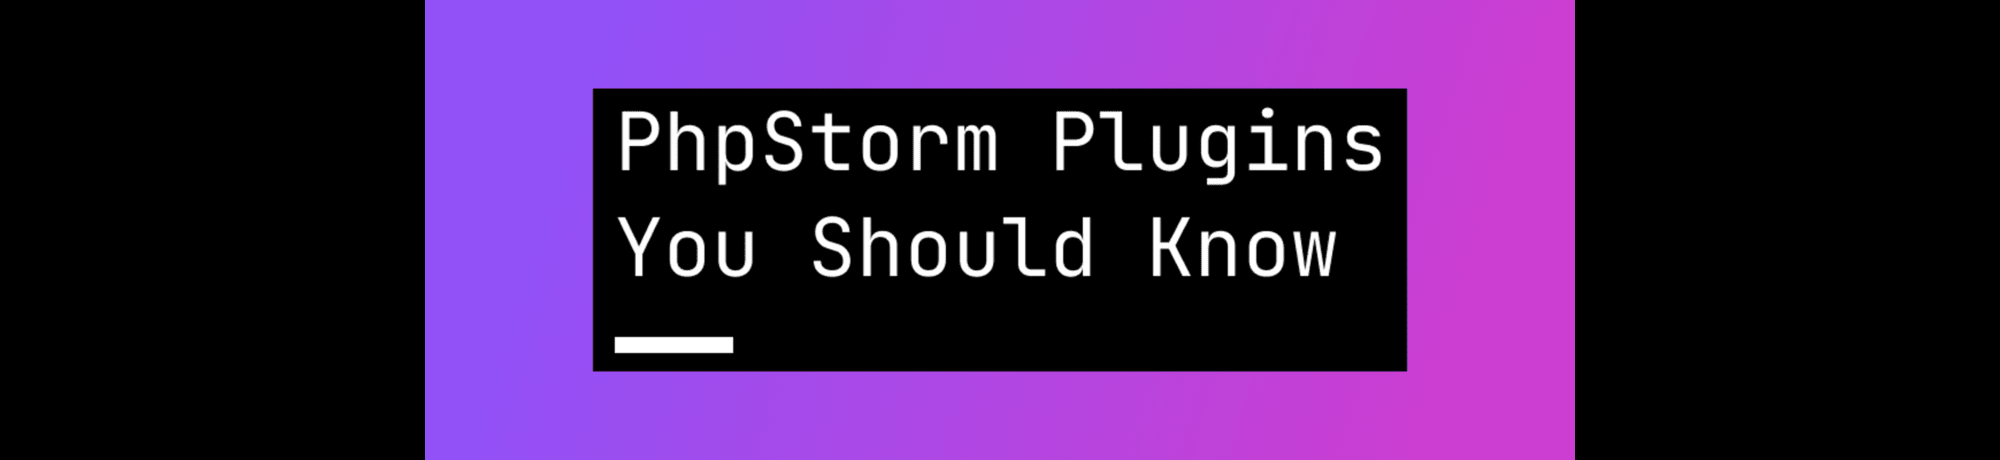 PhpStorm plugins